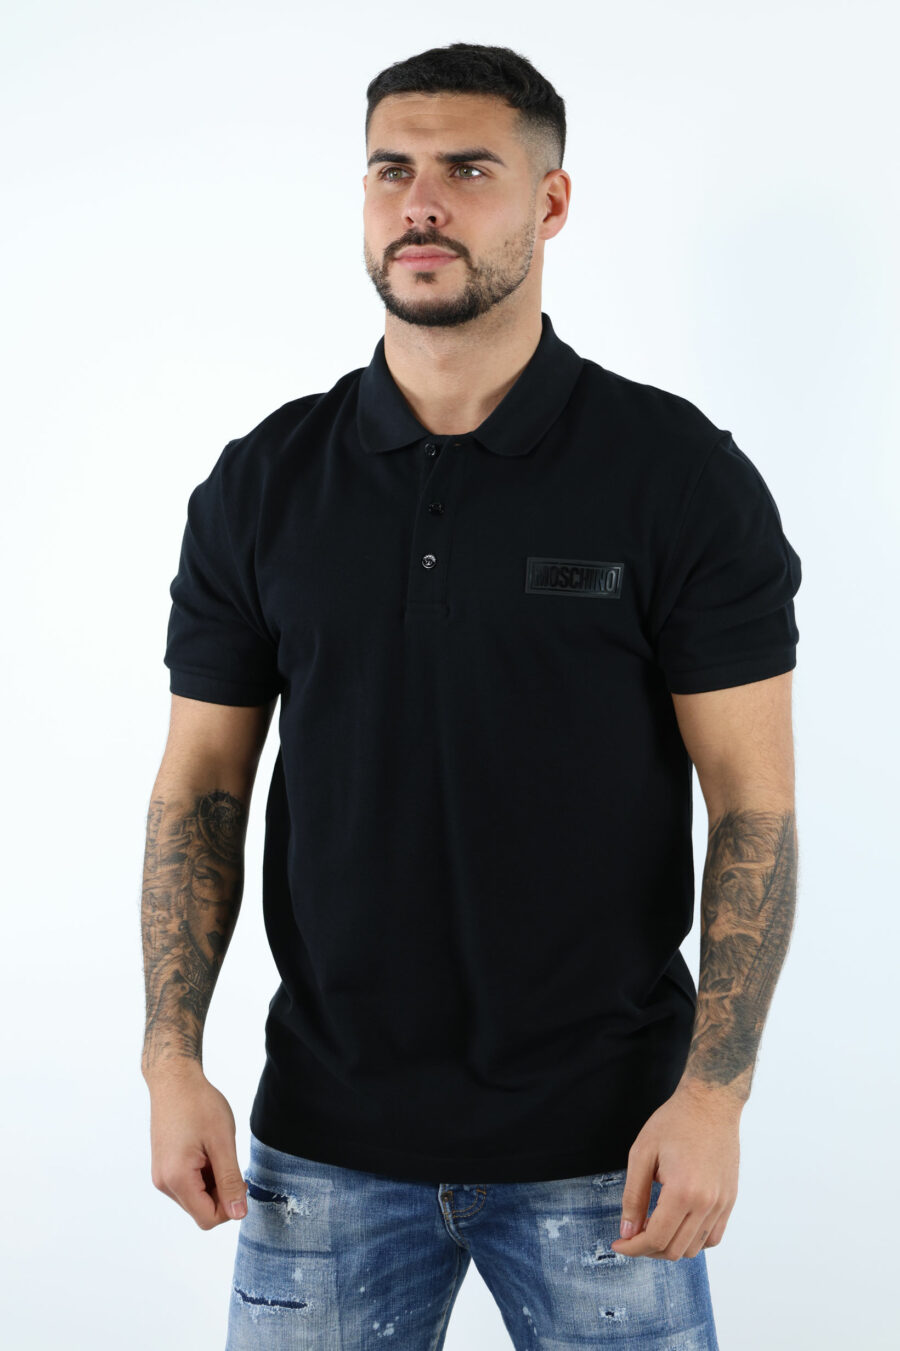 Camiseta negra con minilogo etiqueta blanca - 106965